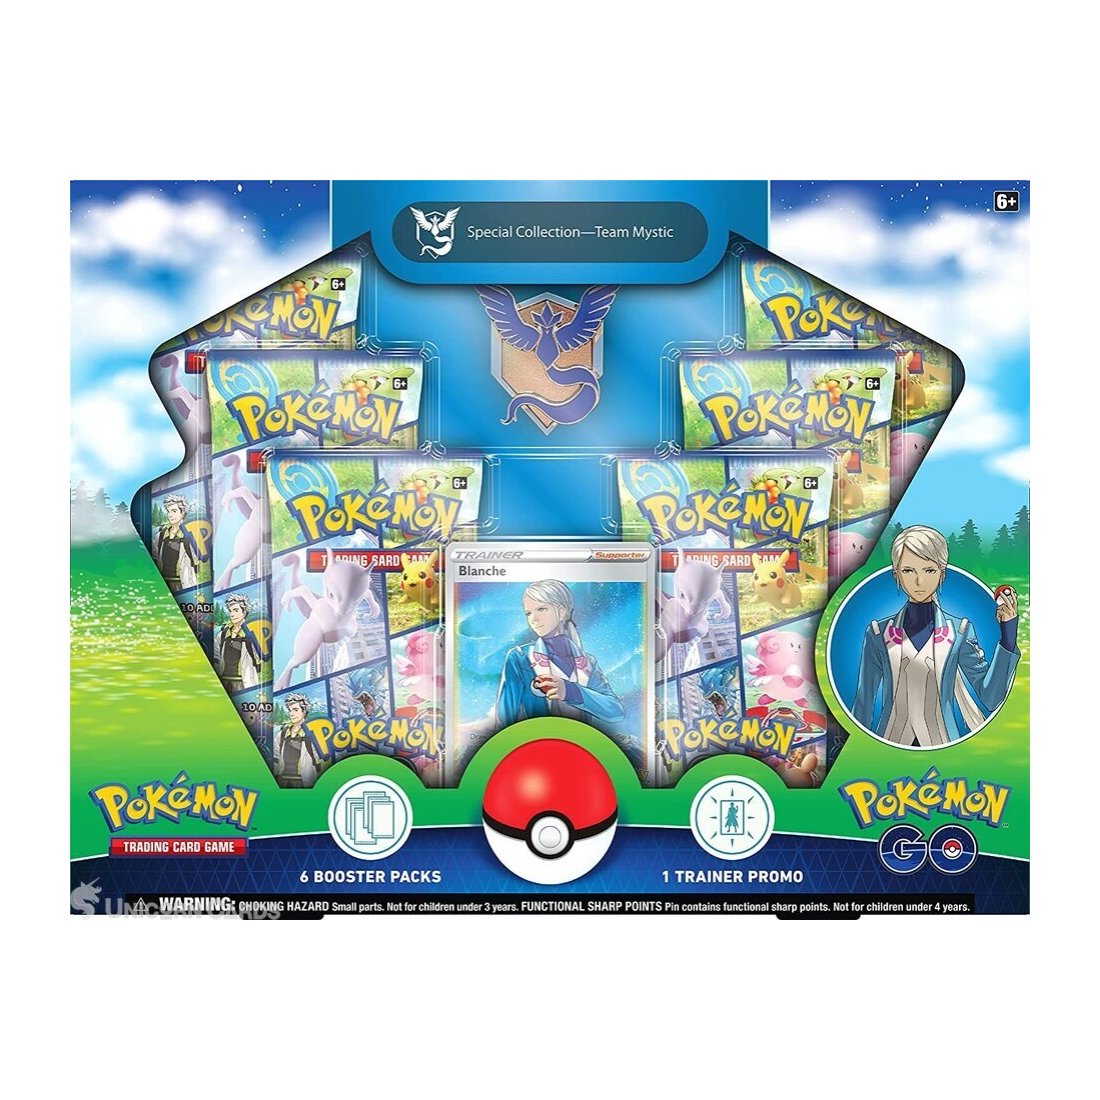 Pokémon Go Special Collection - Team Mystic